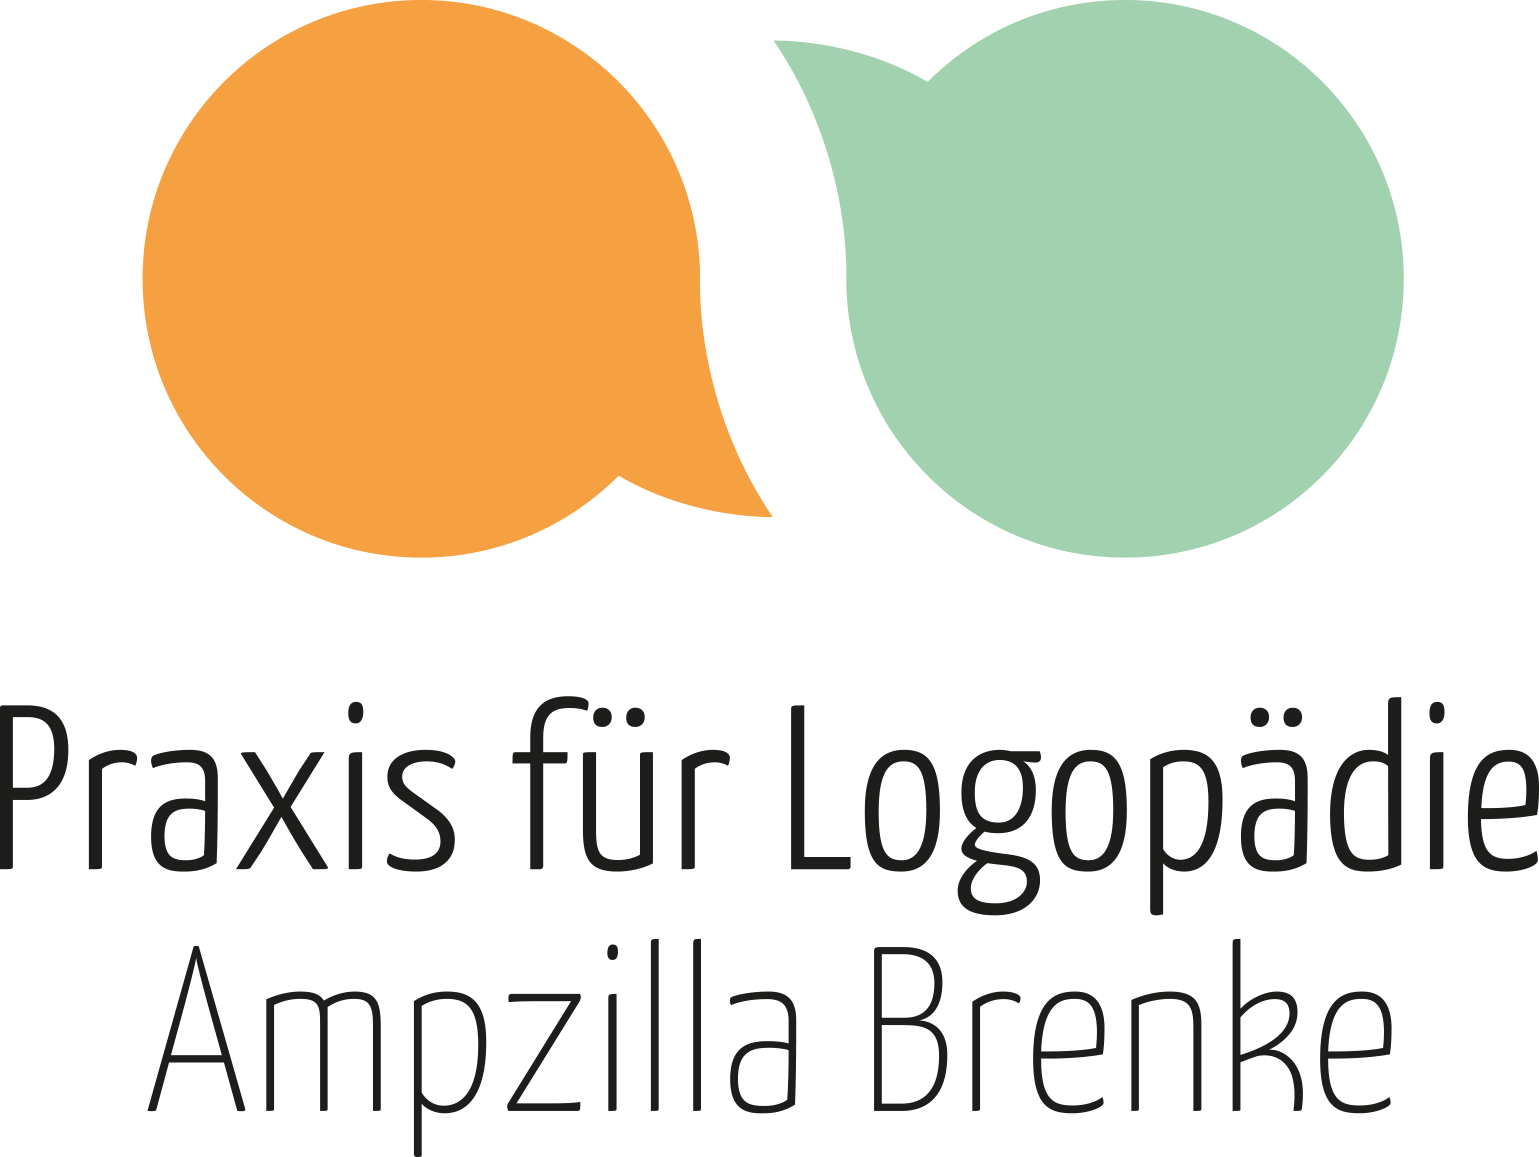 Praxis für Logopädie Ampzilla Brenke Hannover Logo